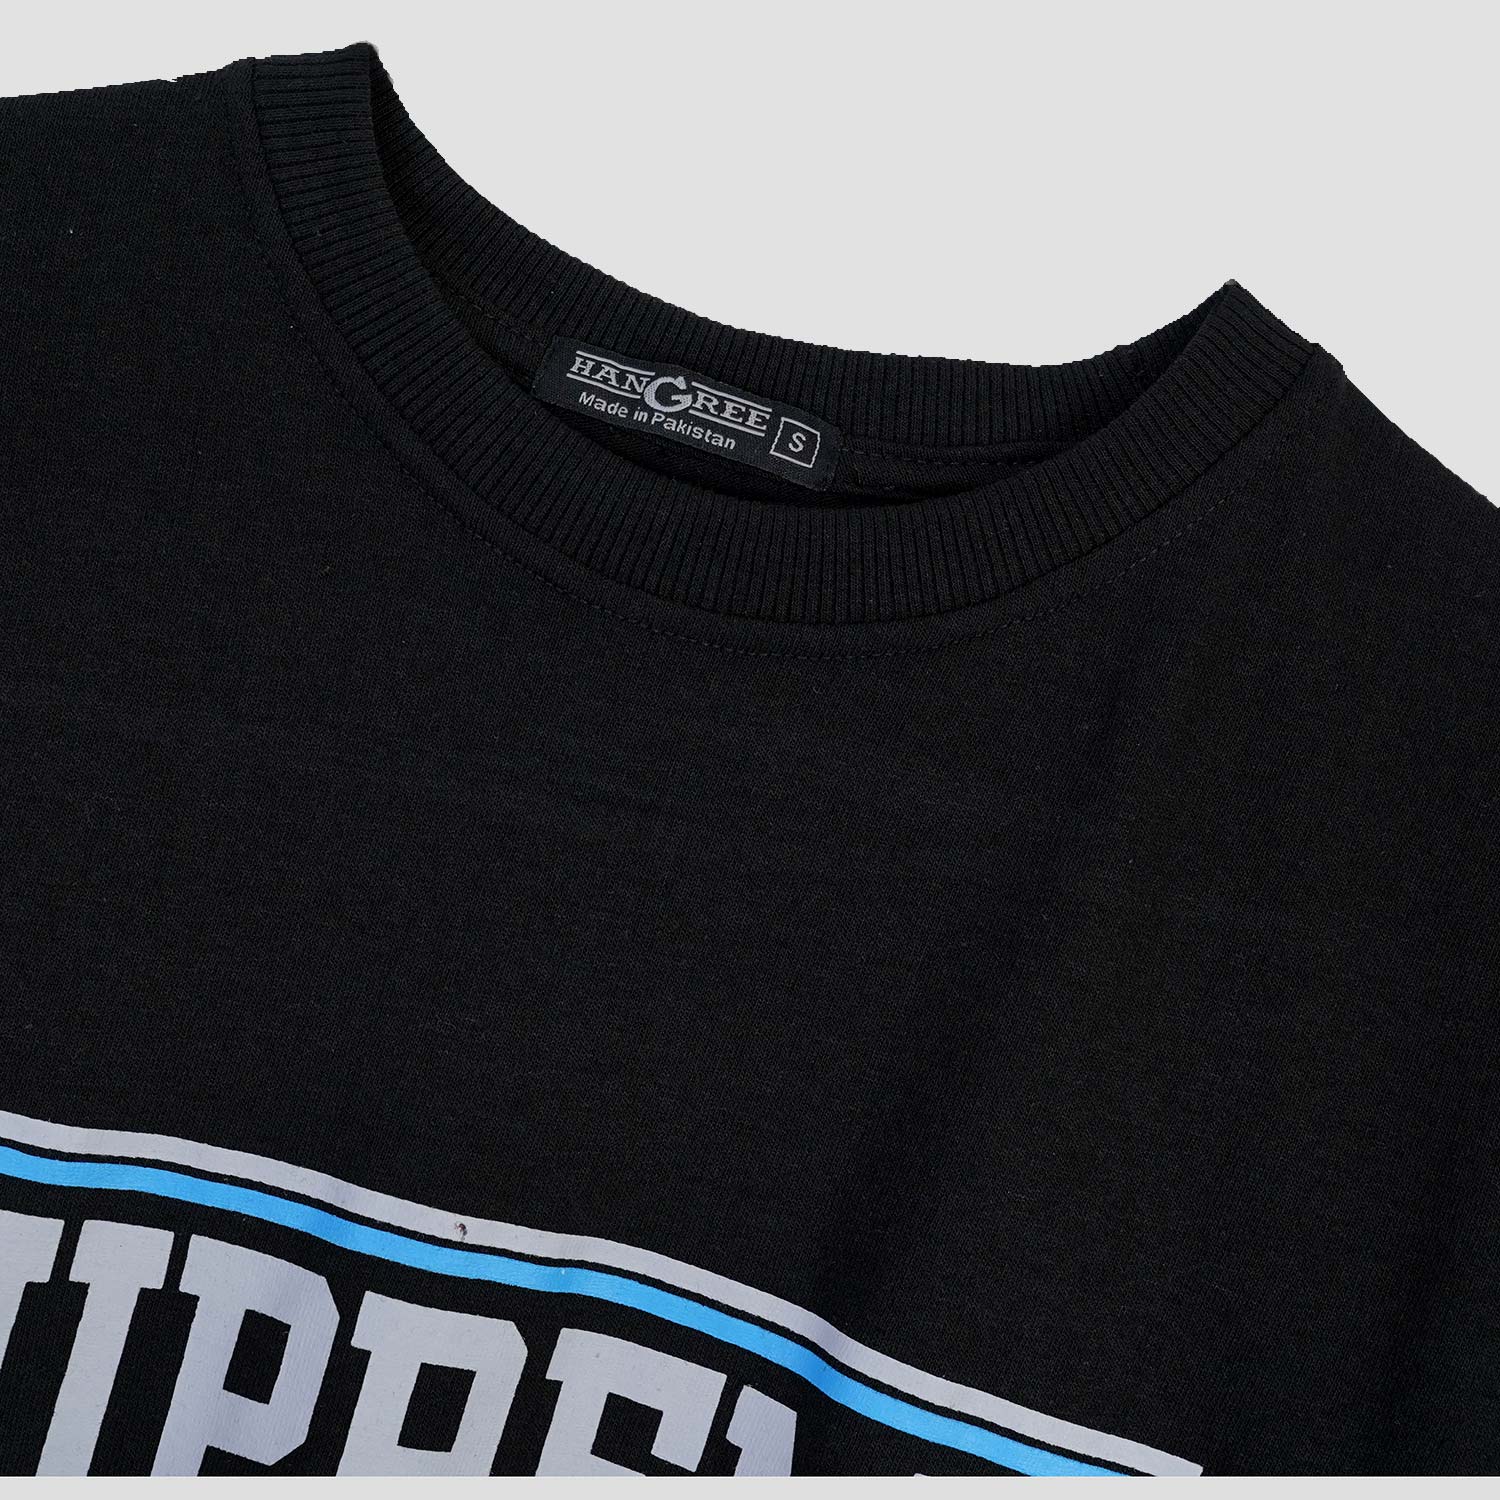 HG "Supreme" Printed Black T-Shirt For Men's